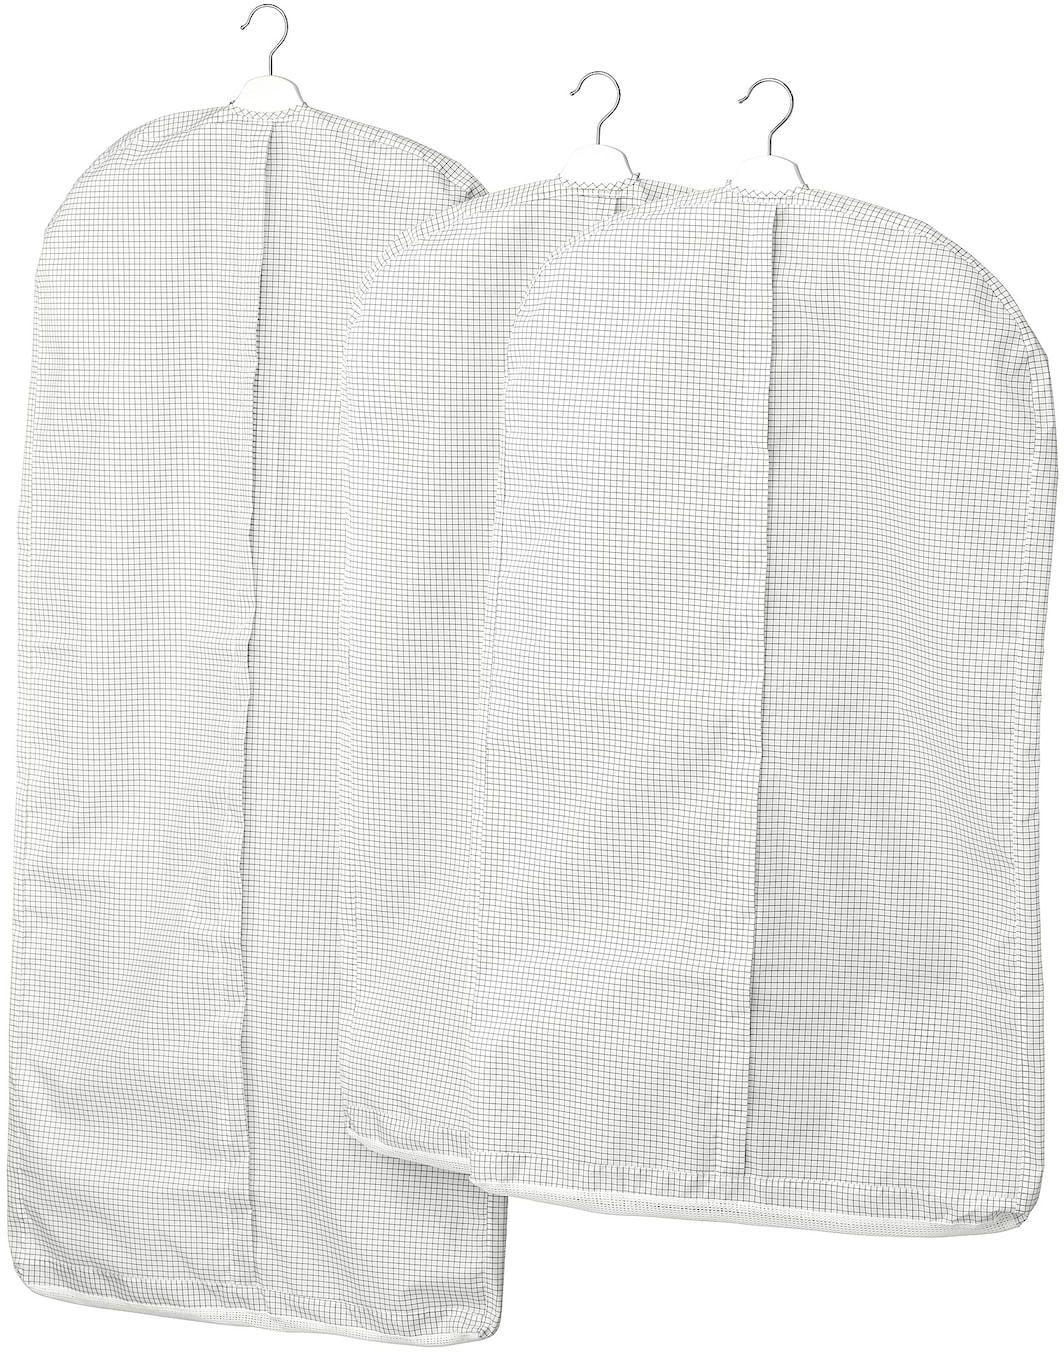 STUK Clothes cover, set of 3 - white/grey